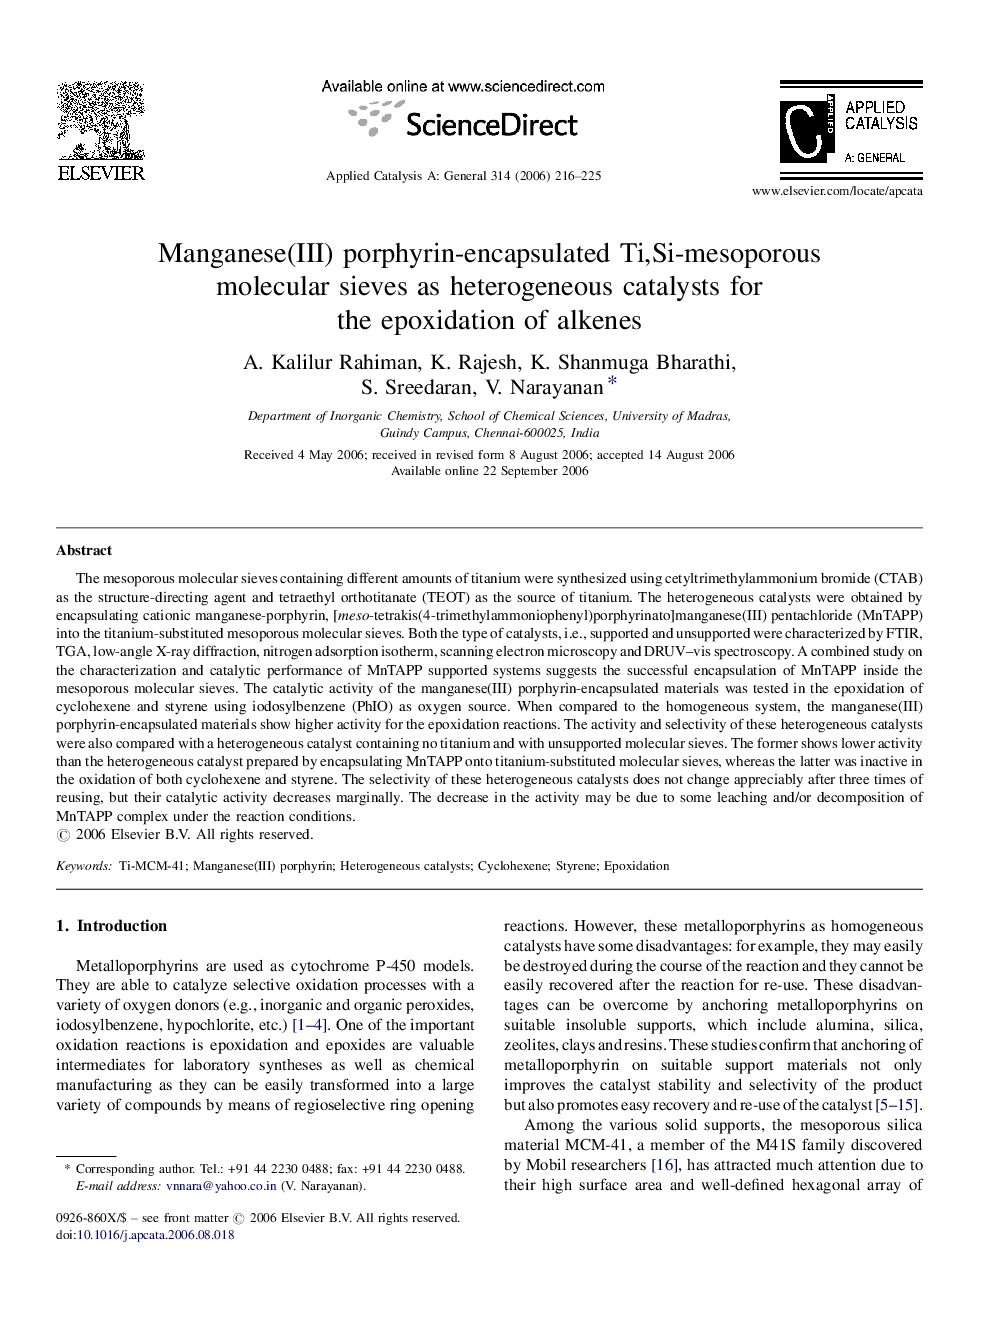 Manganese(III) porphyrin-encapsulated Ti,Si-mesoporous molecular sieves as heterogeneous catalysts for the epoxidation of alkenes